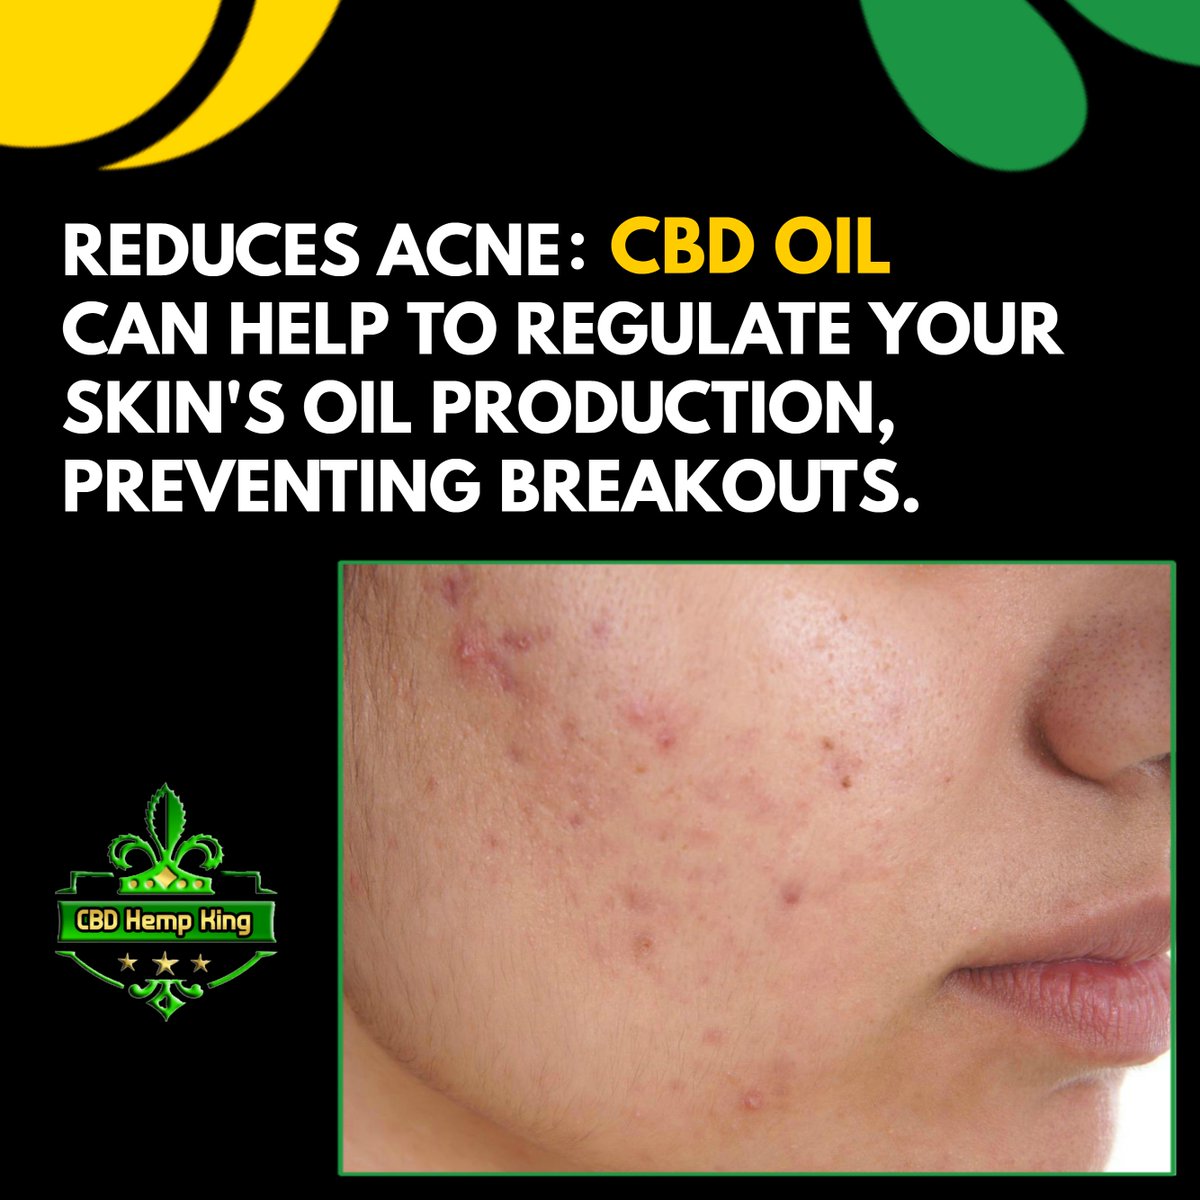 Reduces Acne: CBD Oil can help to regulate your skin's oil production, preventing breakouts.

#cbdhempking #hempflowers #cbdflowers #uk